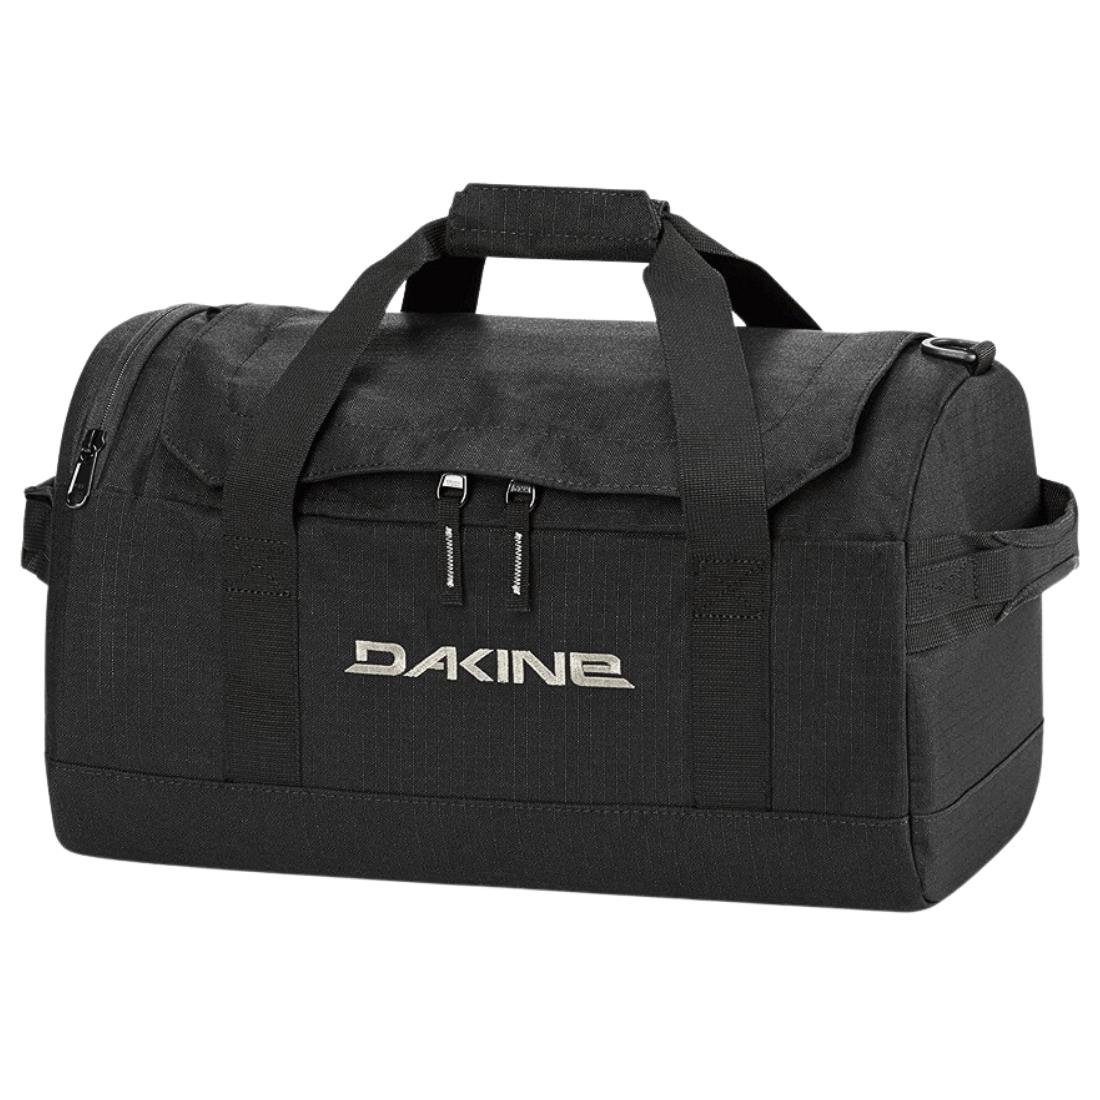 Dakine 25L Eq Packable Duffle Bag - Black - Duffle Bag by Dakine 25L